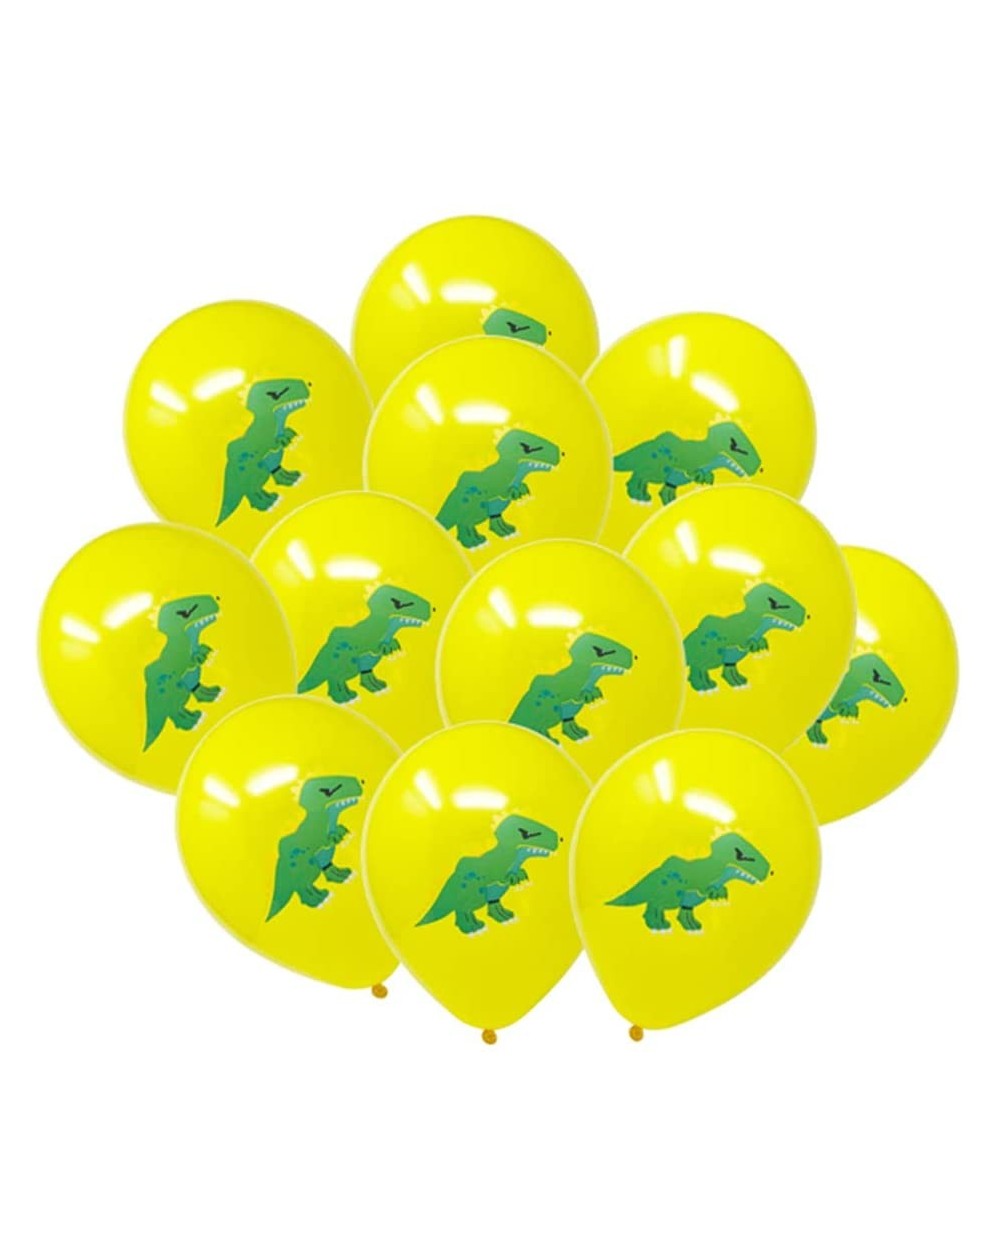 Balloons 12-Inch Dinosaur Party Latex Balloons (25pcs- Yellow) - Yellow - CN18AILLH8X $8.96